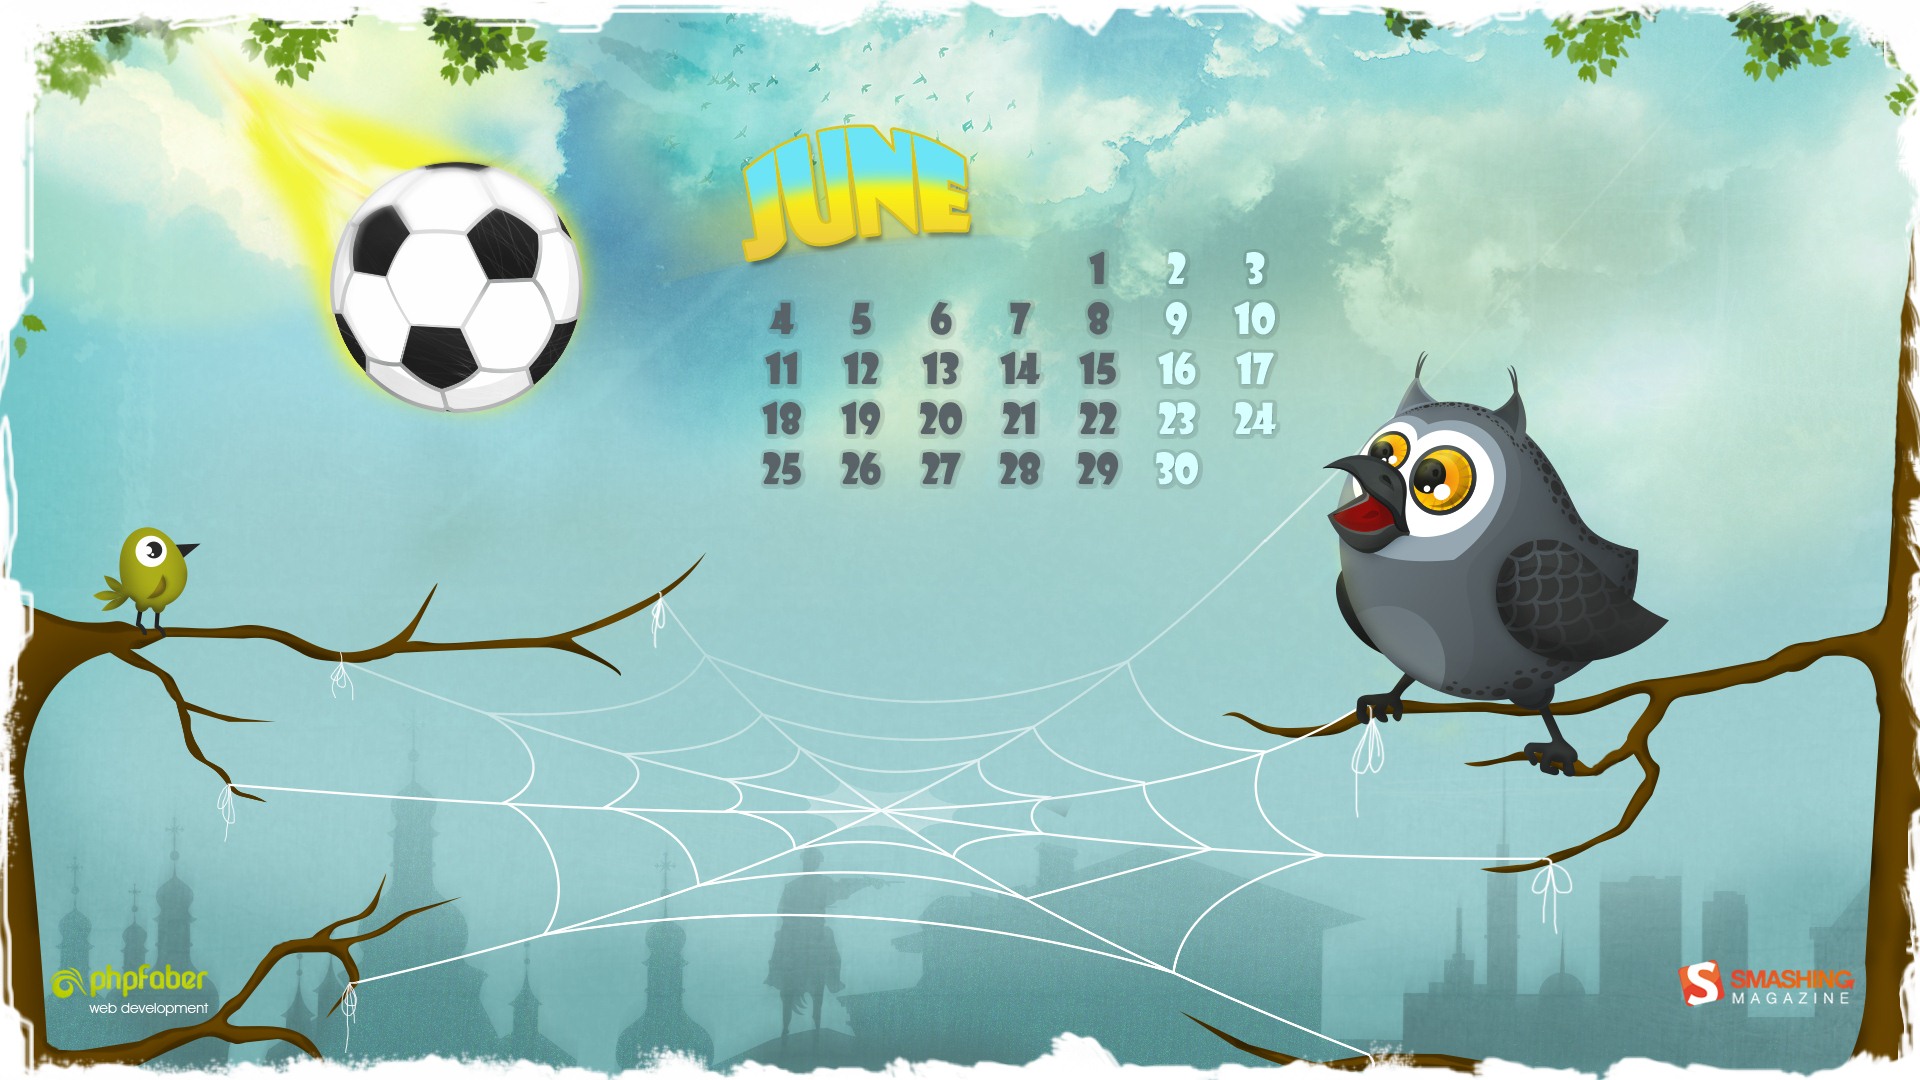 June 2012 Calendar wallpapers (1) #15 - 1920x1080